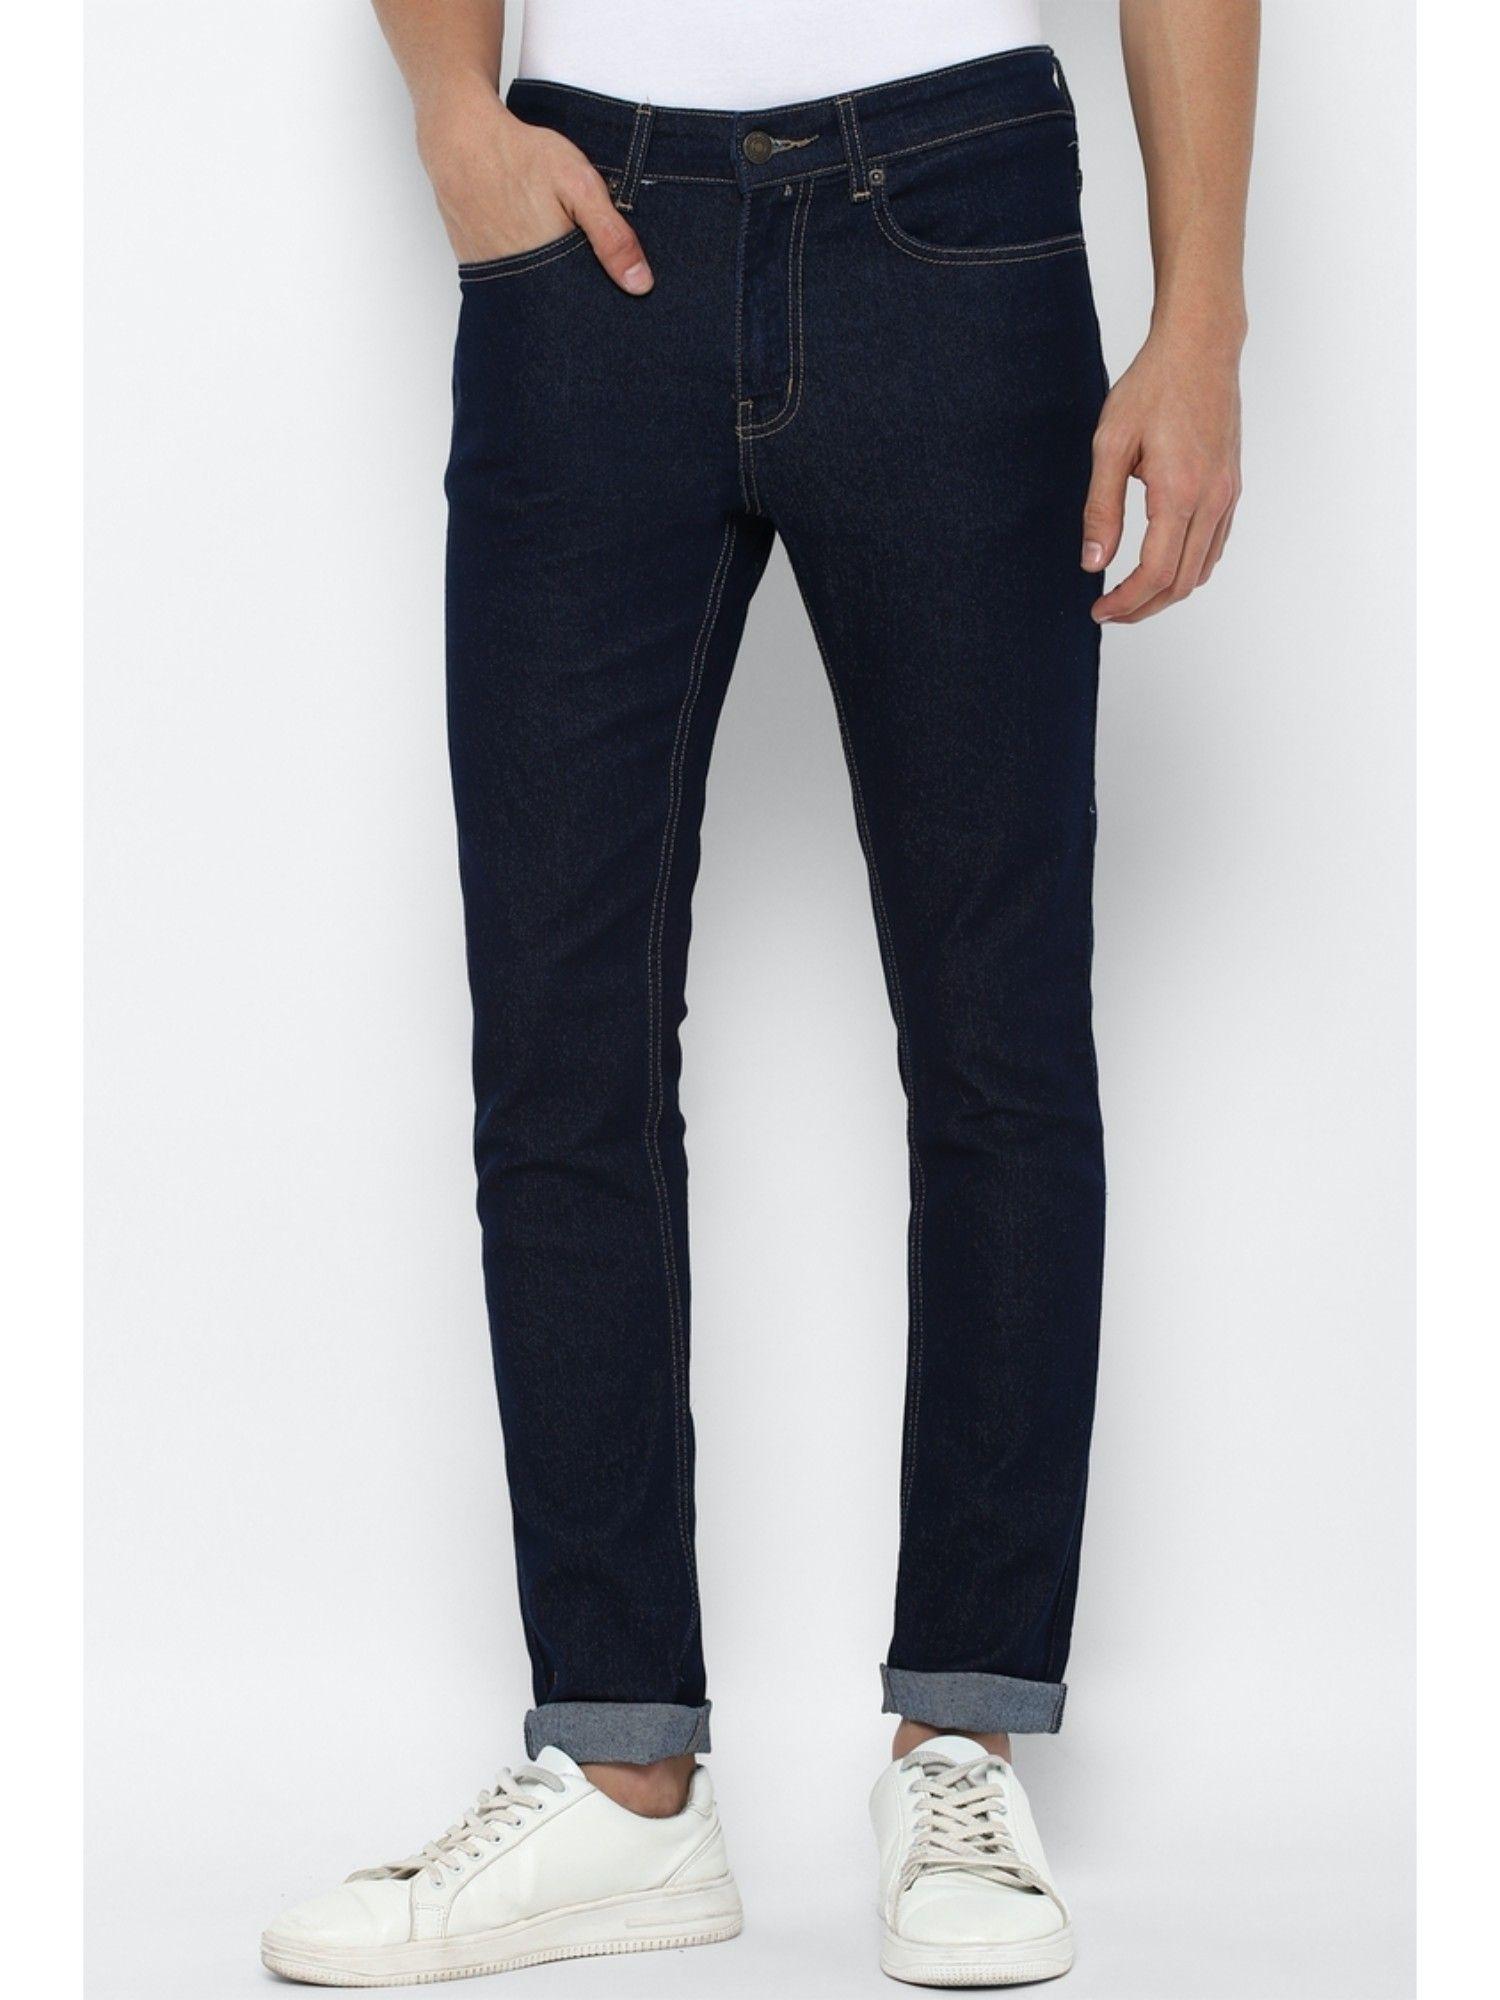 solid navy regular denim jeans